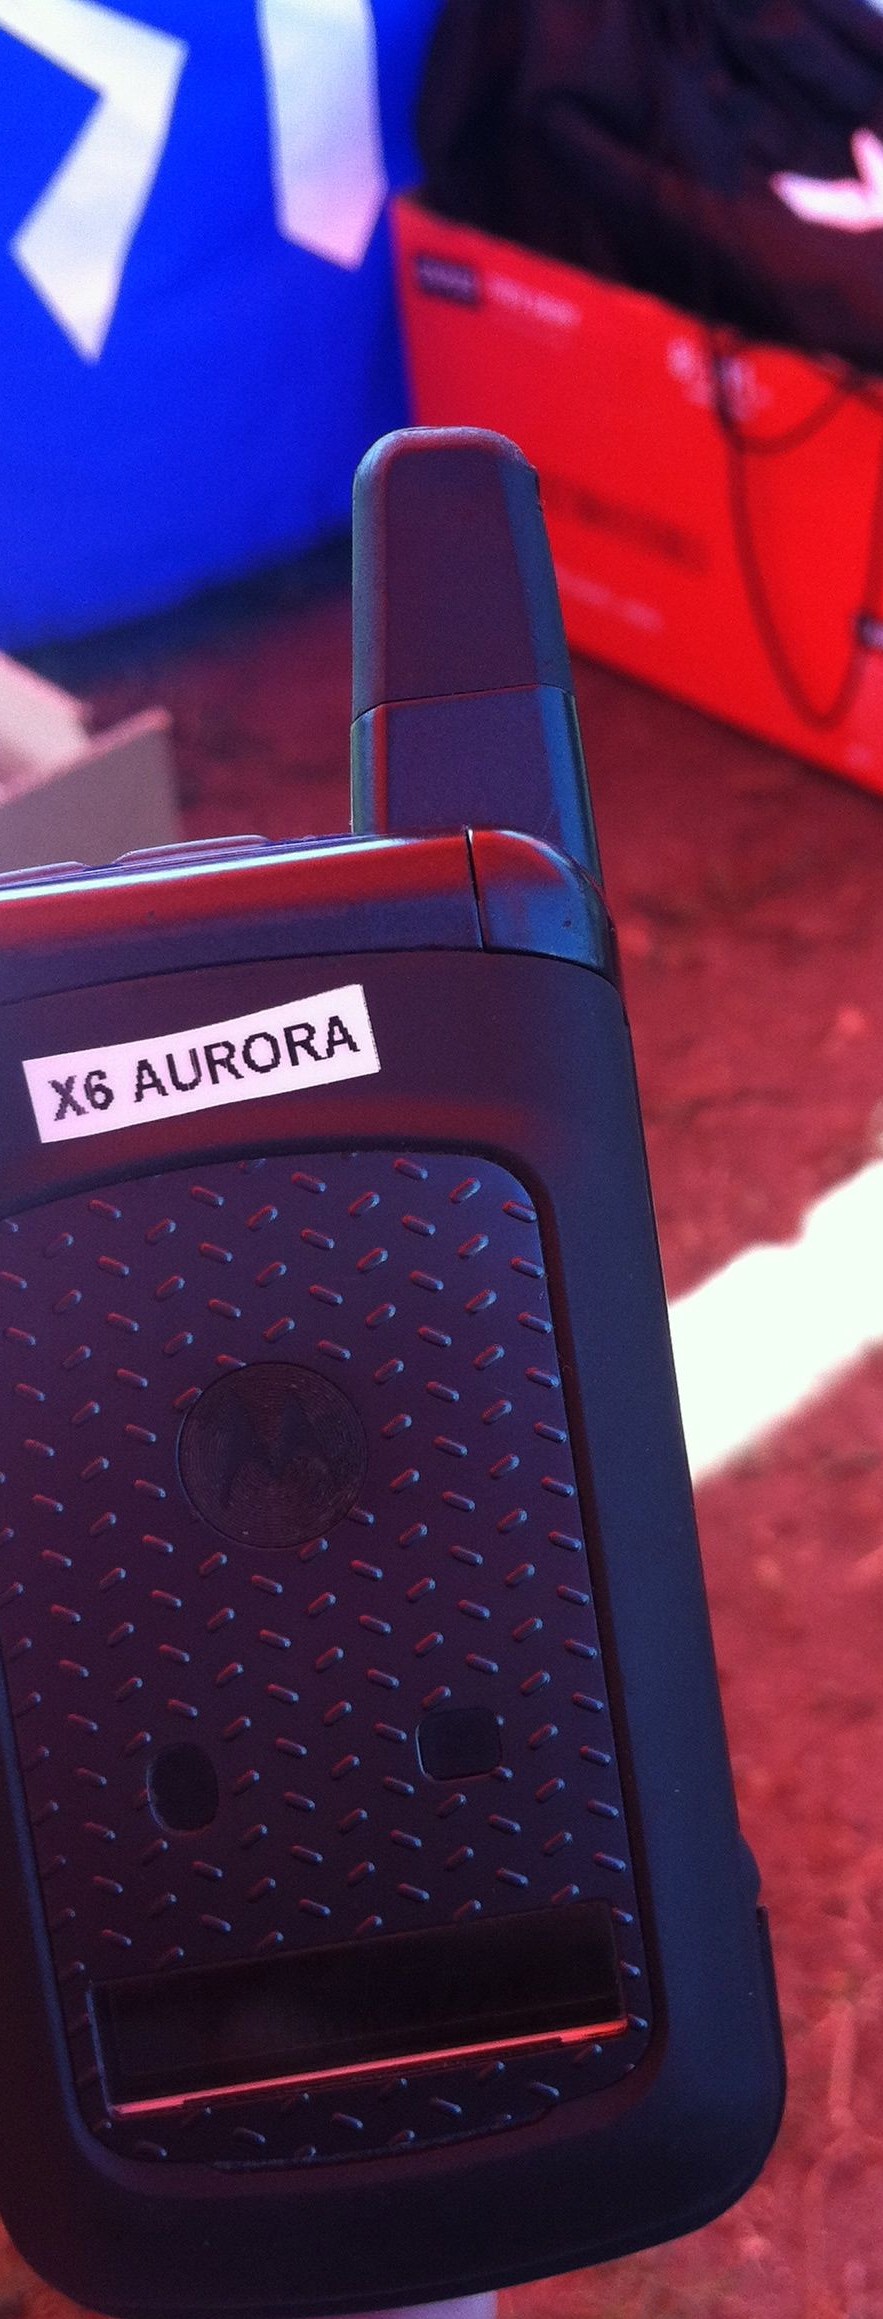 Aurora gets her own walkie talkie/phone communication system at Exchange 6 at Ragnar SoCal 2012